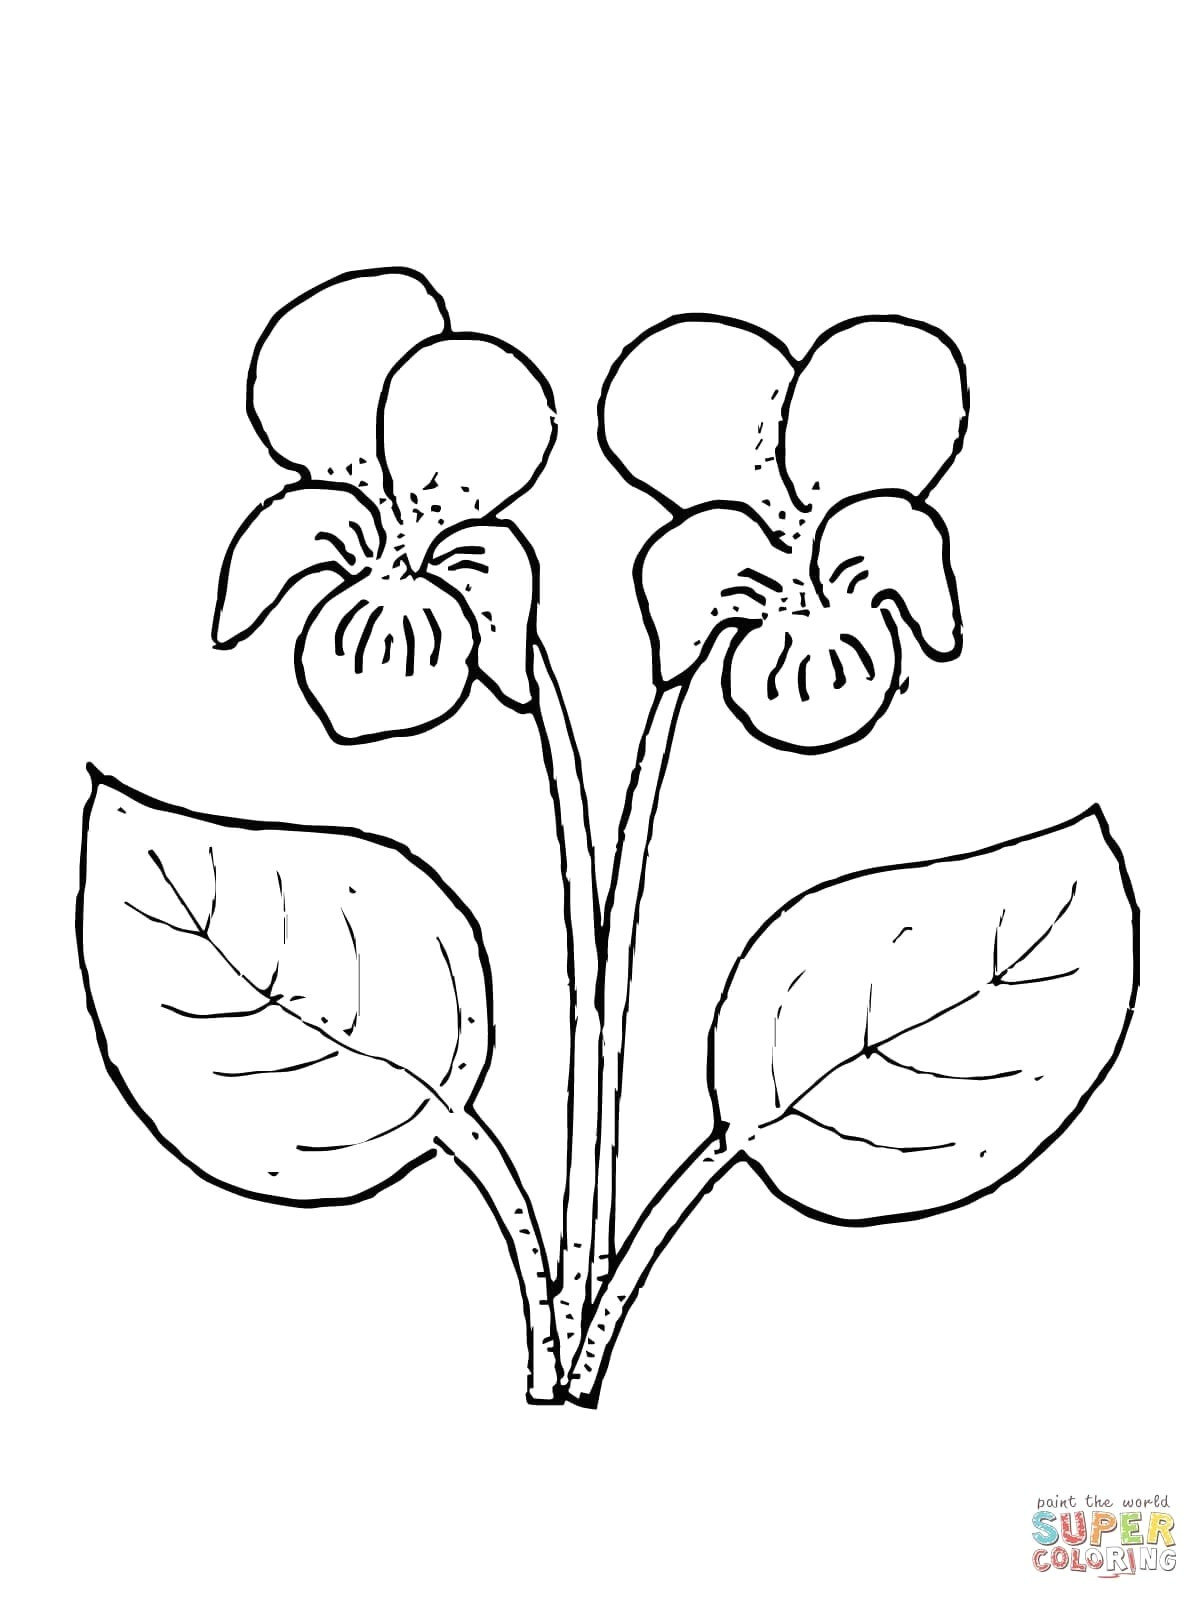 Drawing Of Flower Vase for Kid 19 Awesome White Single Flower Vase Bogekompresorturkiye Com